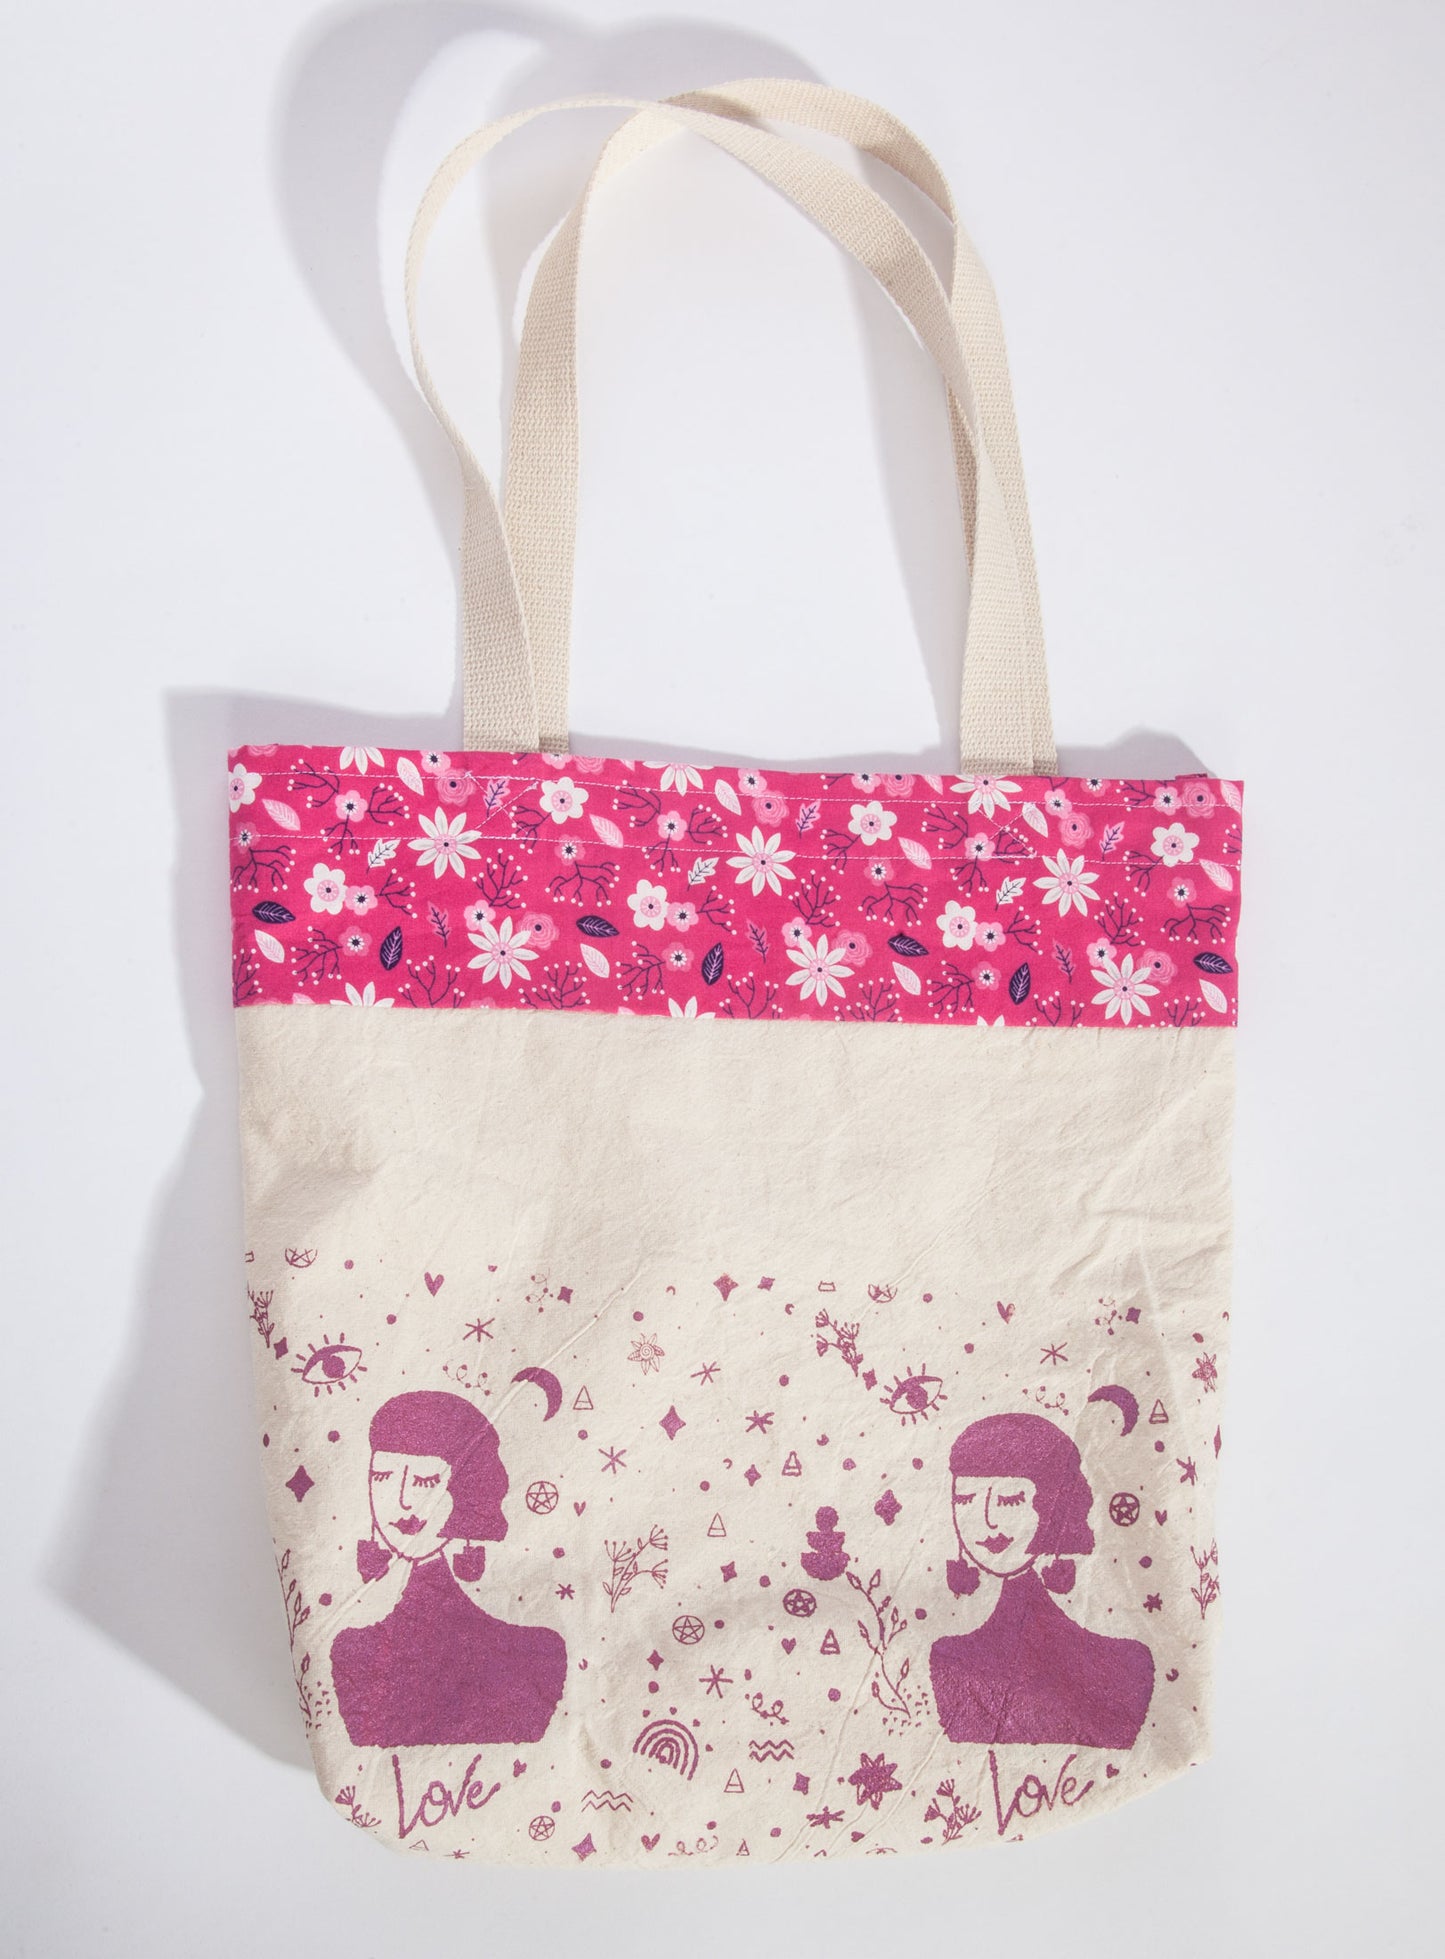 100% Cotton Eco Friendly Reusable Shopping Bag - Art Illustration - Boho style